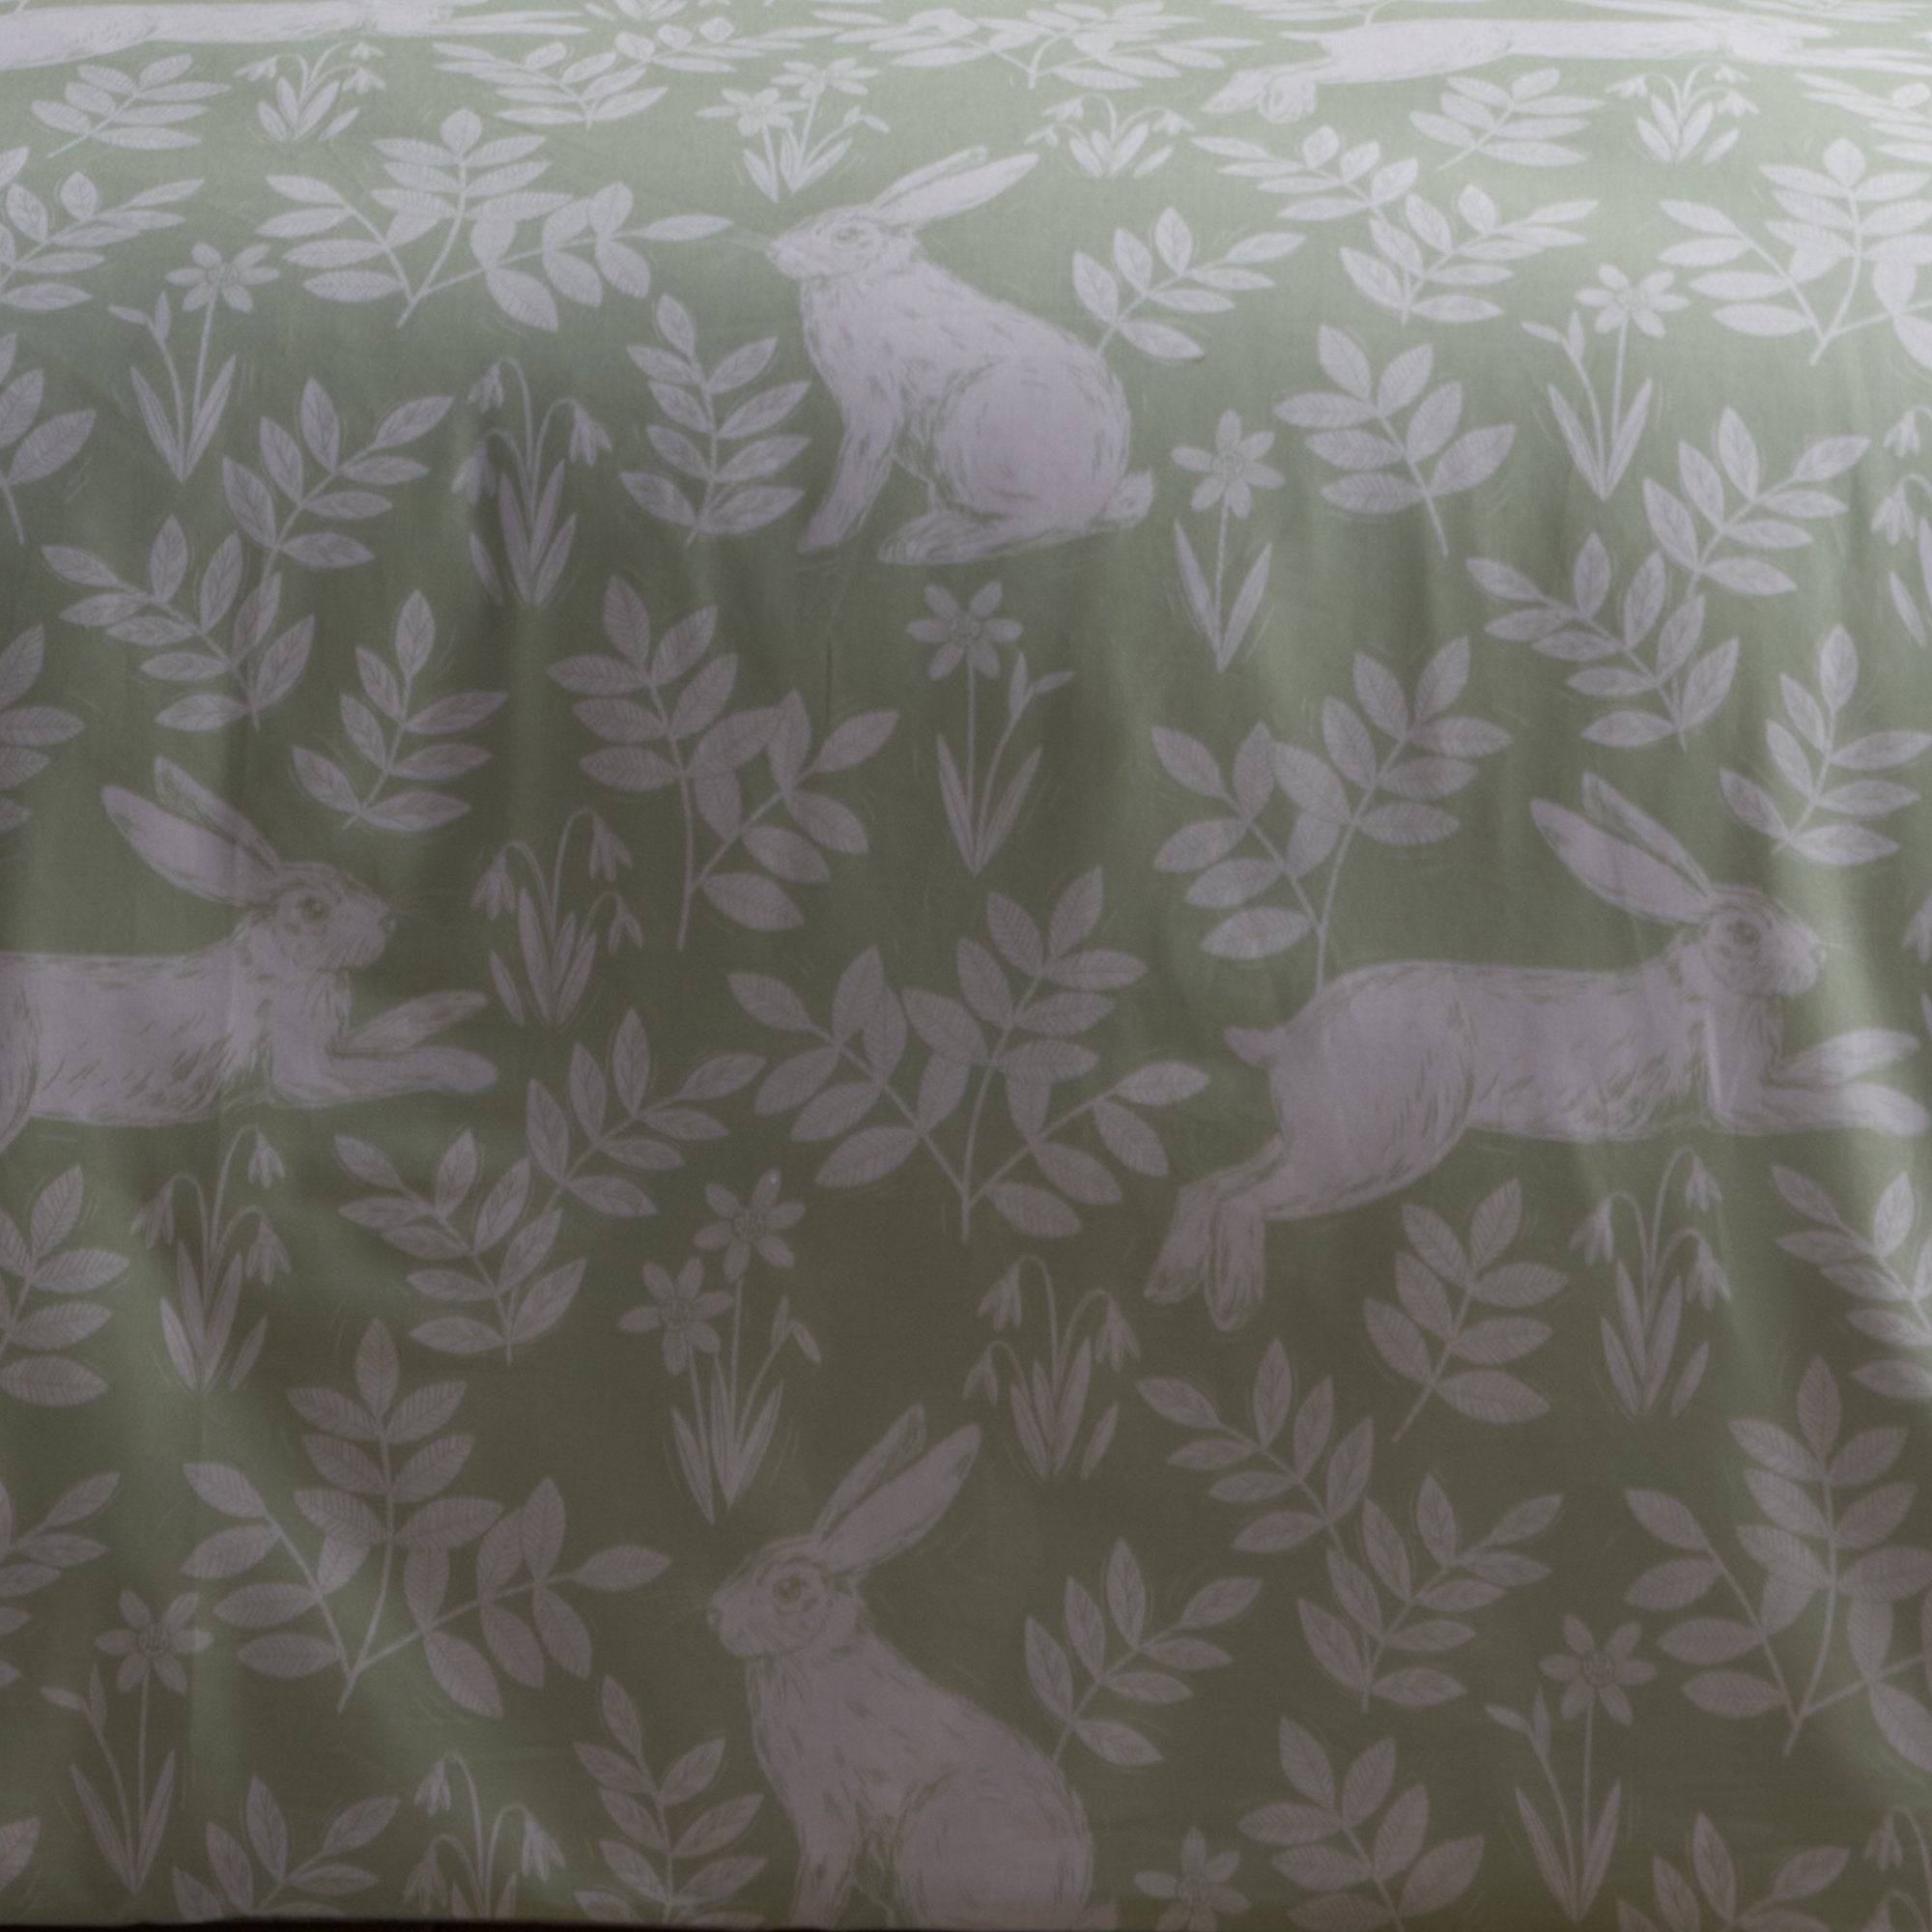 Duvet Cover Set Spring Rabbits by Dreams & Drapes Design in Green